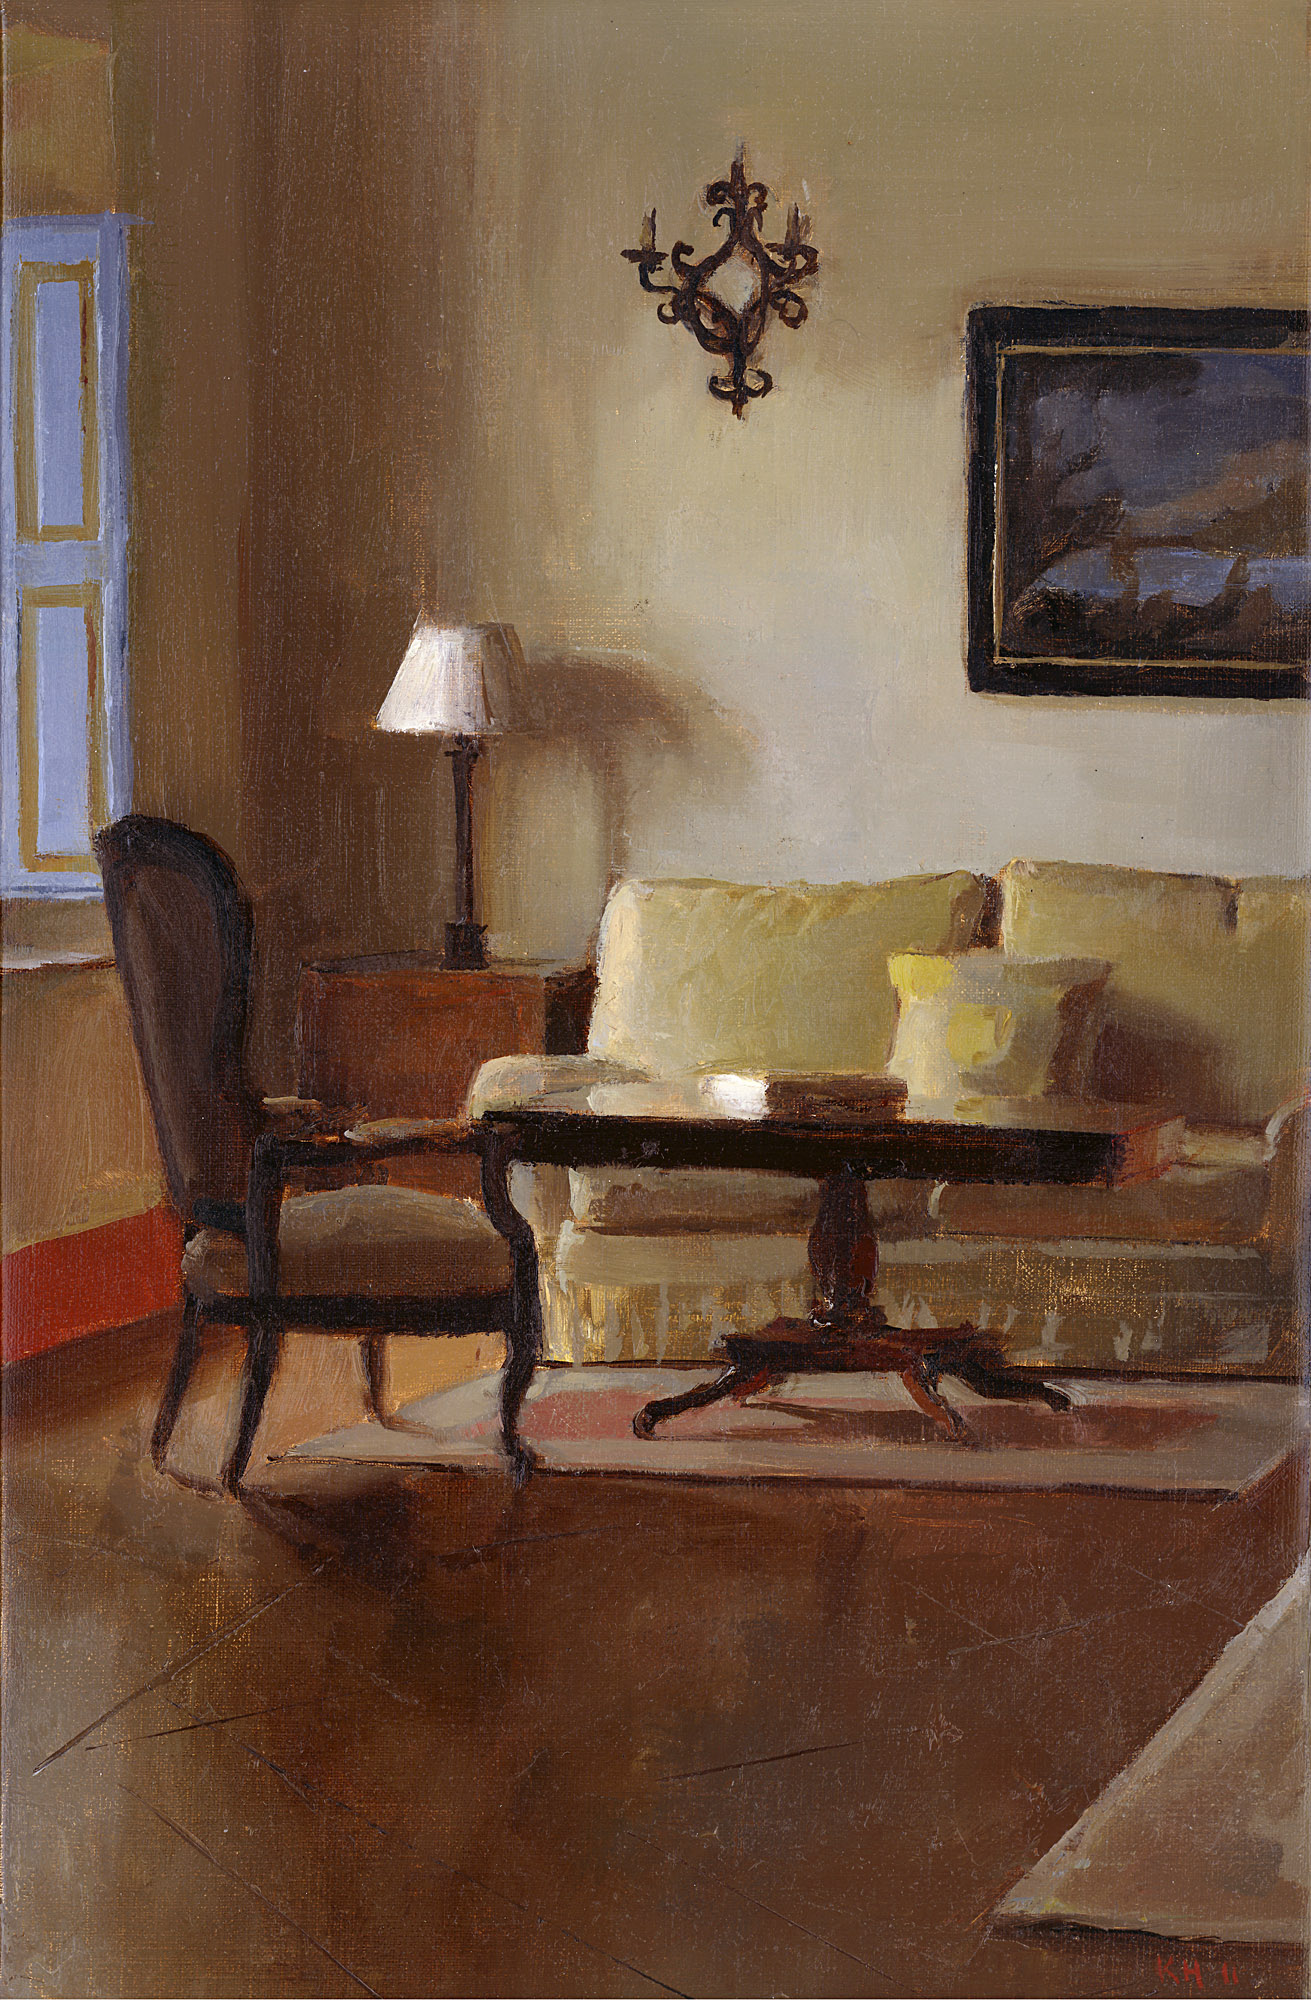 Kenny Harris, "Linda’s Corner, Study," 13.5 x 9 inches, Oil on linen